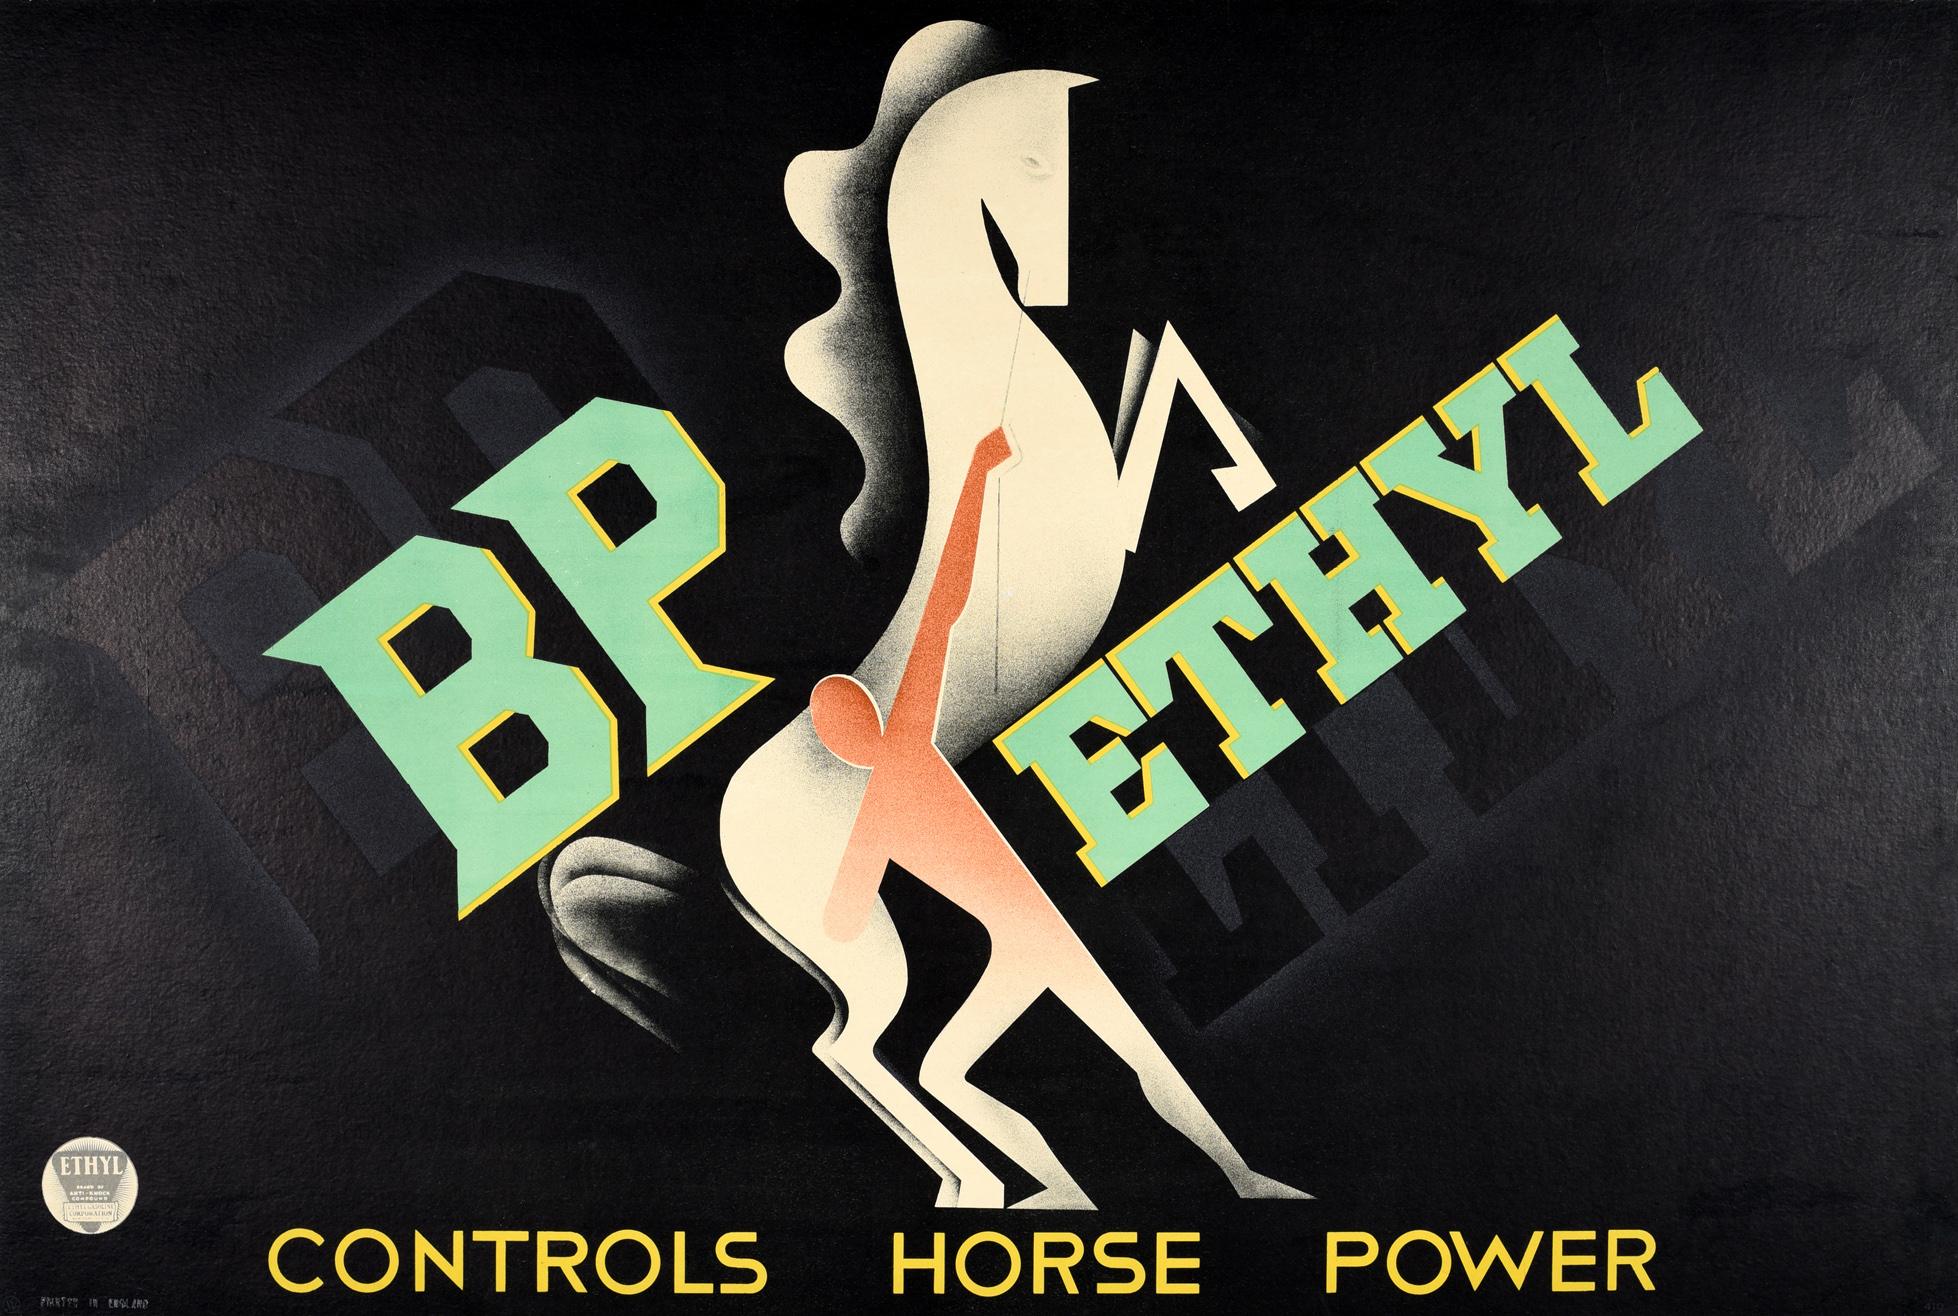 Paolo Garretto Print - Original Vintage Poster BP Ethyl Controls Horse Power Modernist Art Deco Design